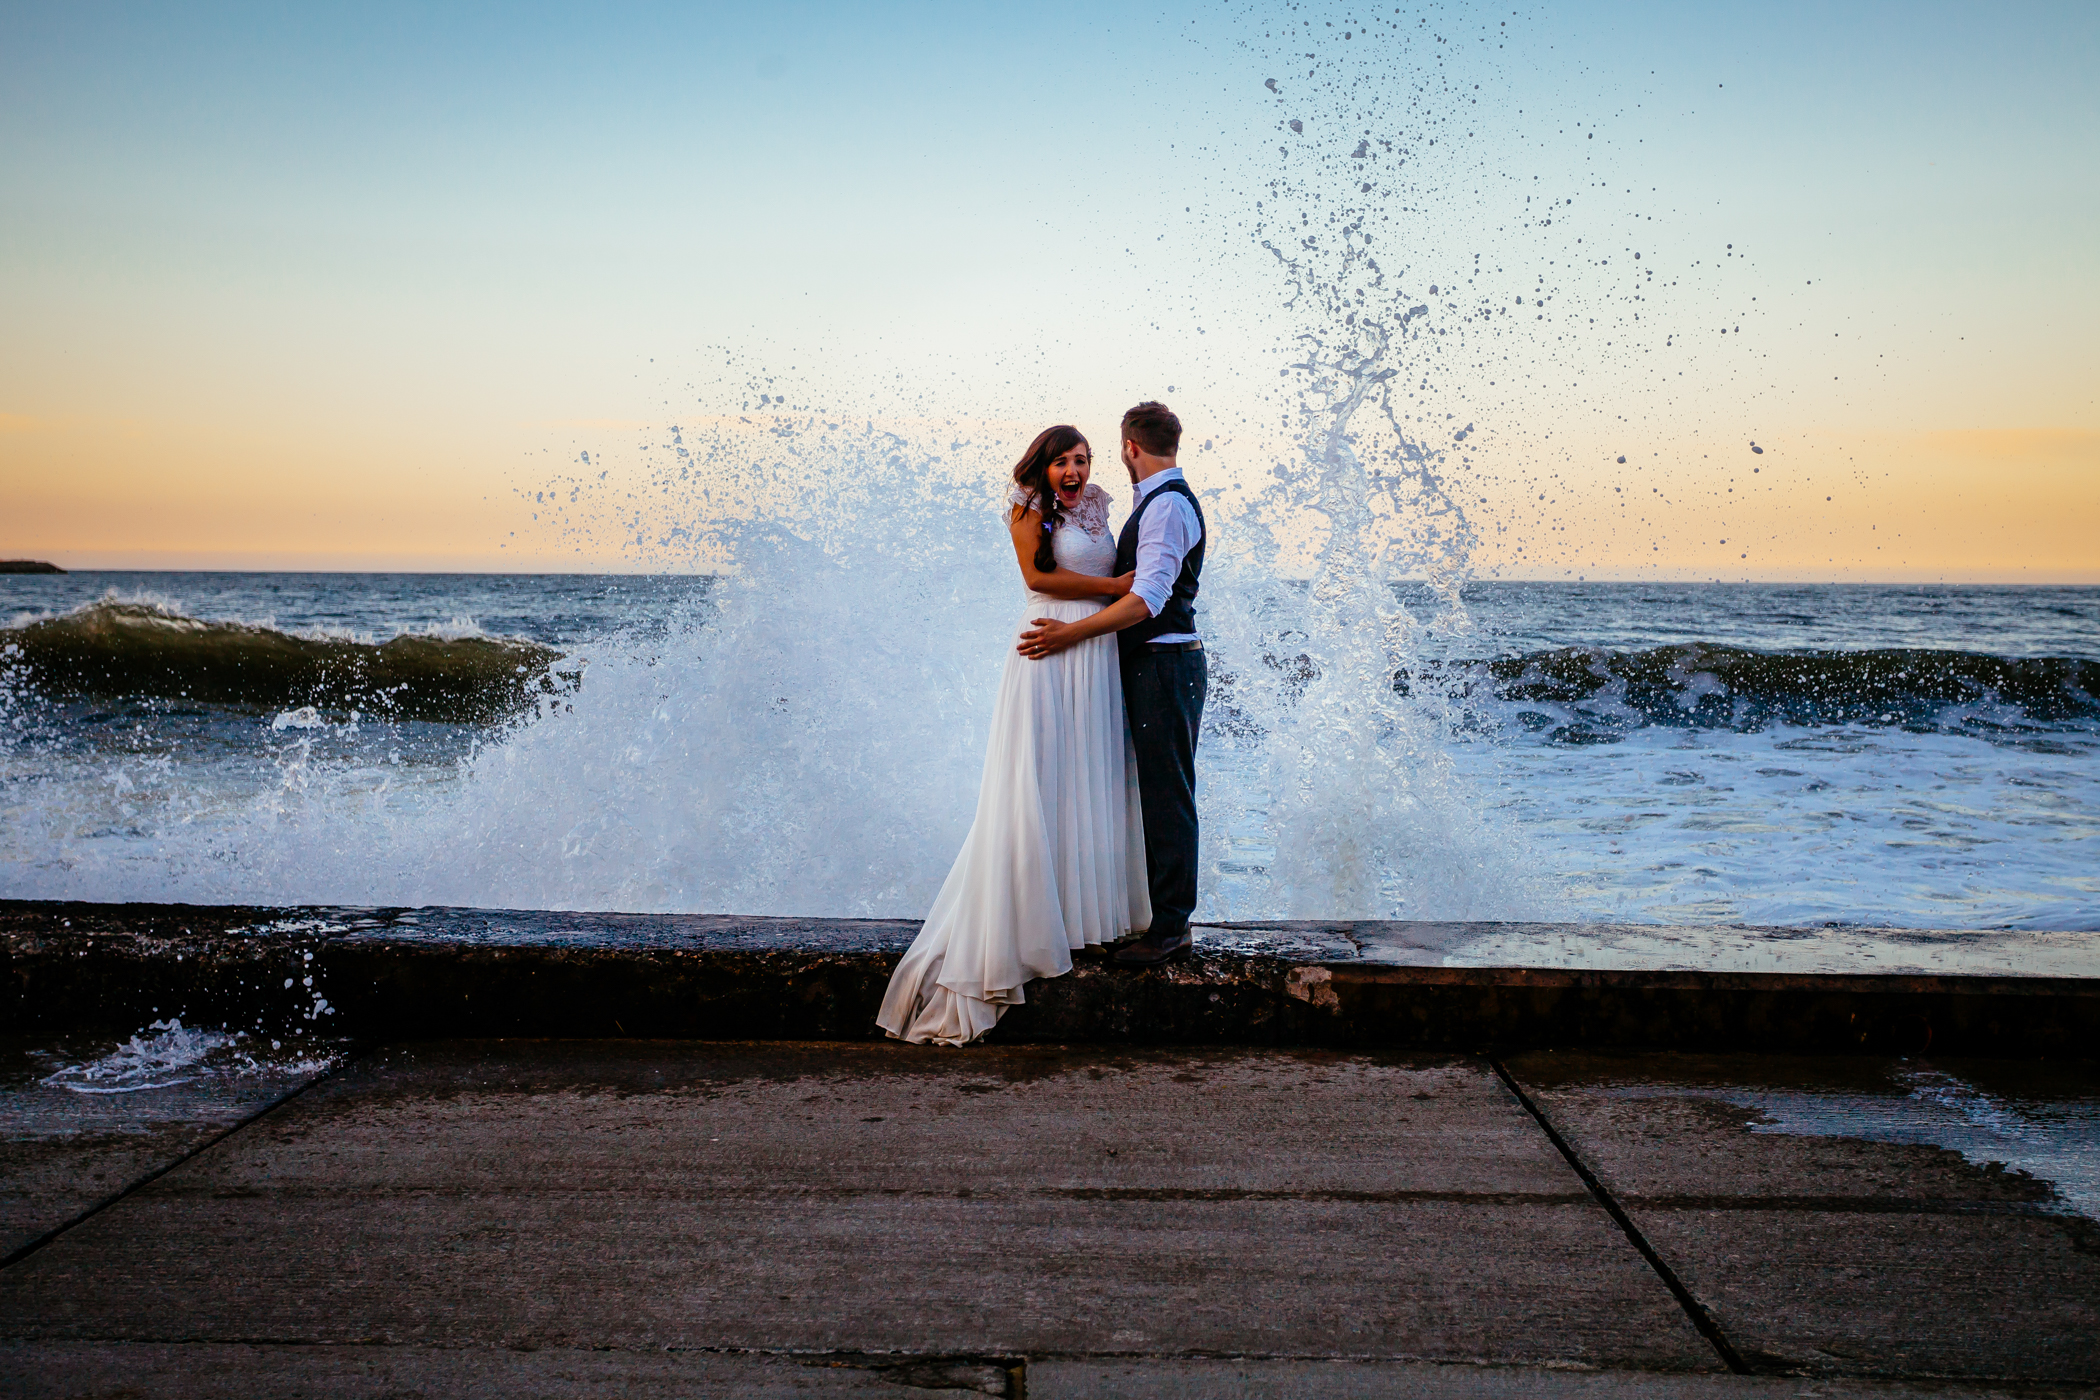 sansom photography beach wedding photography charlotte & mike-68